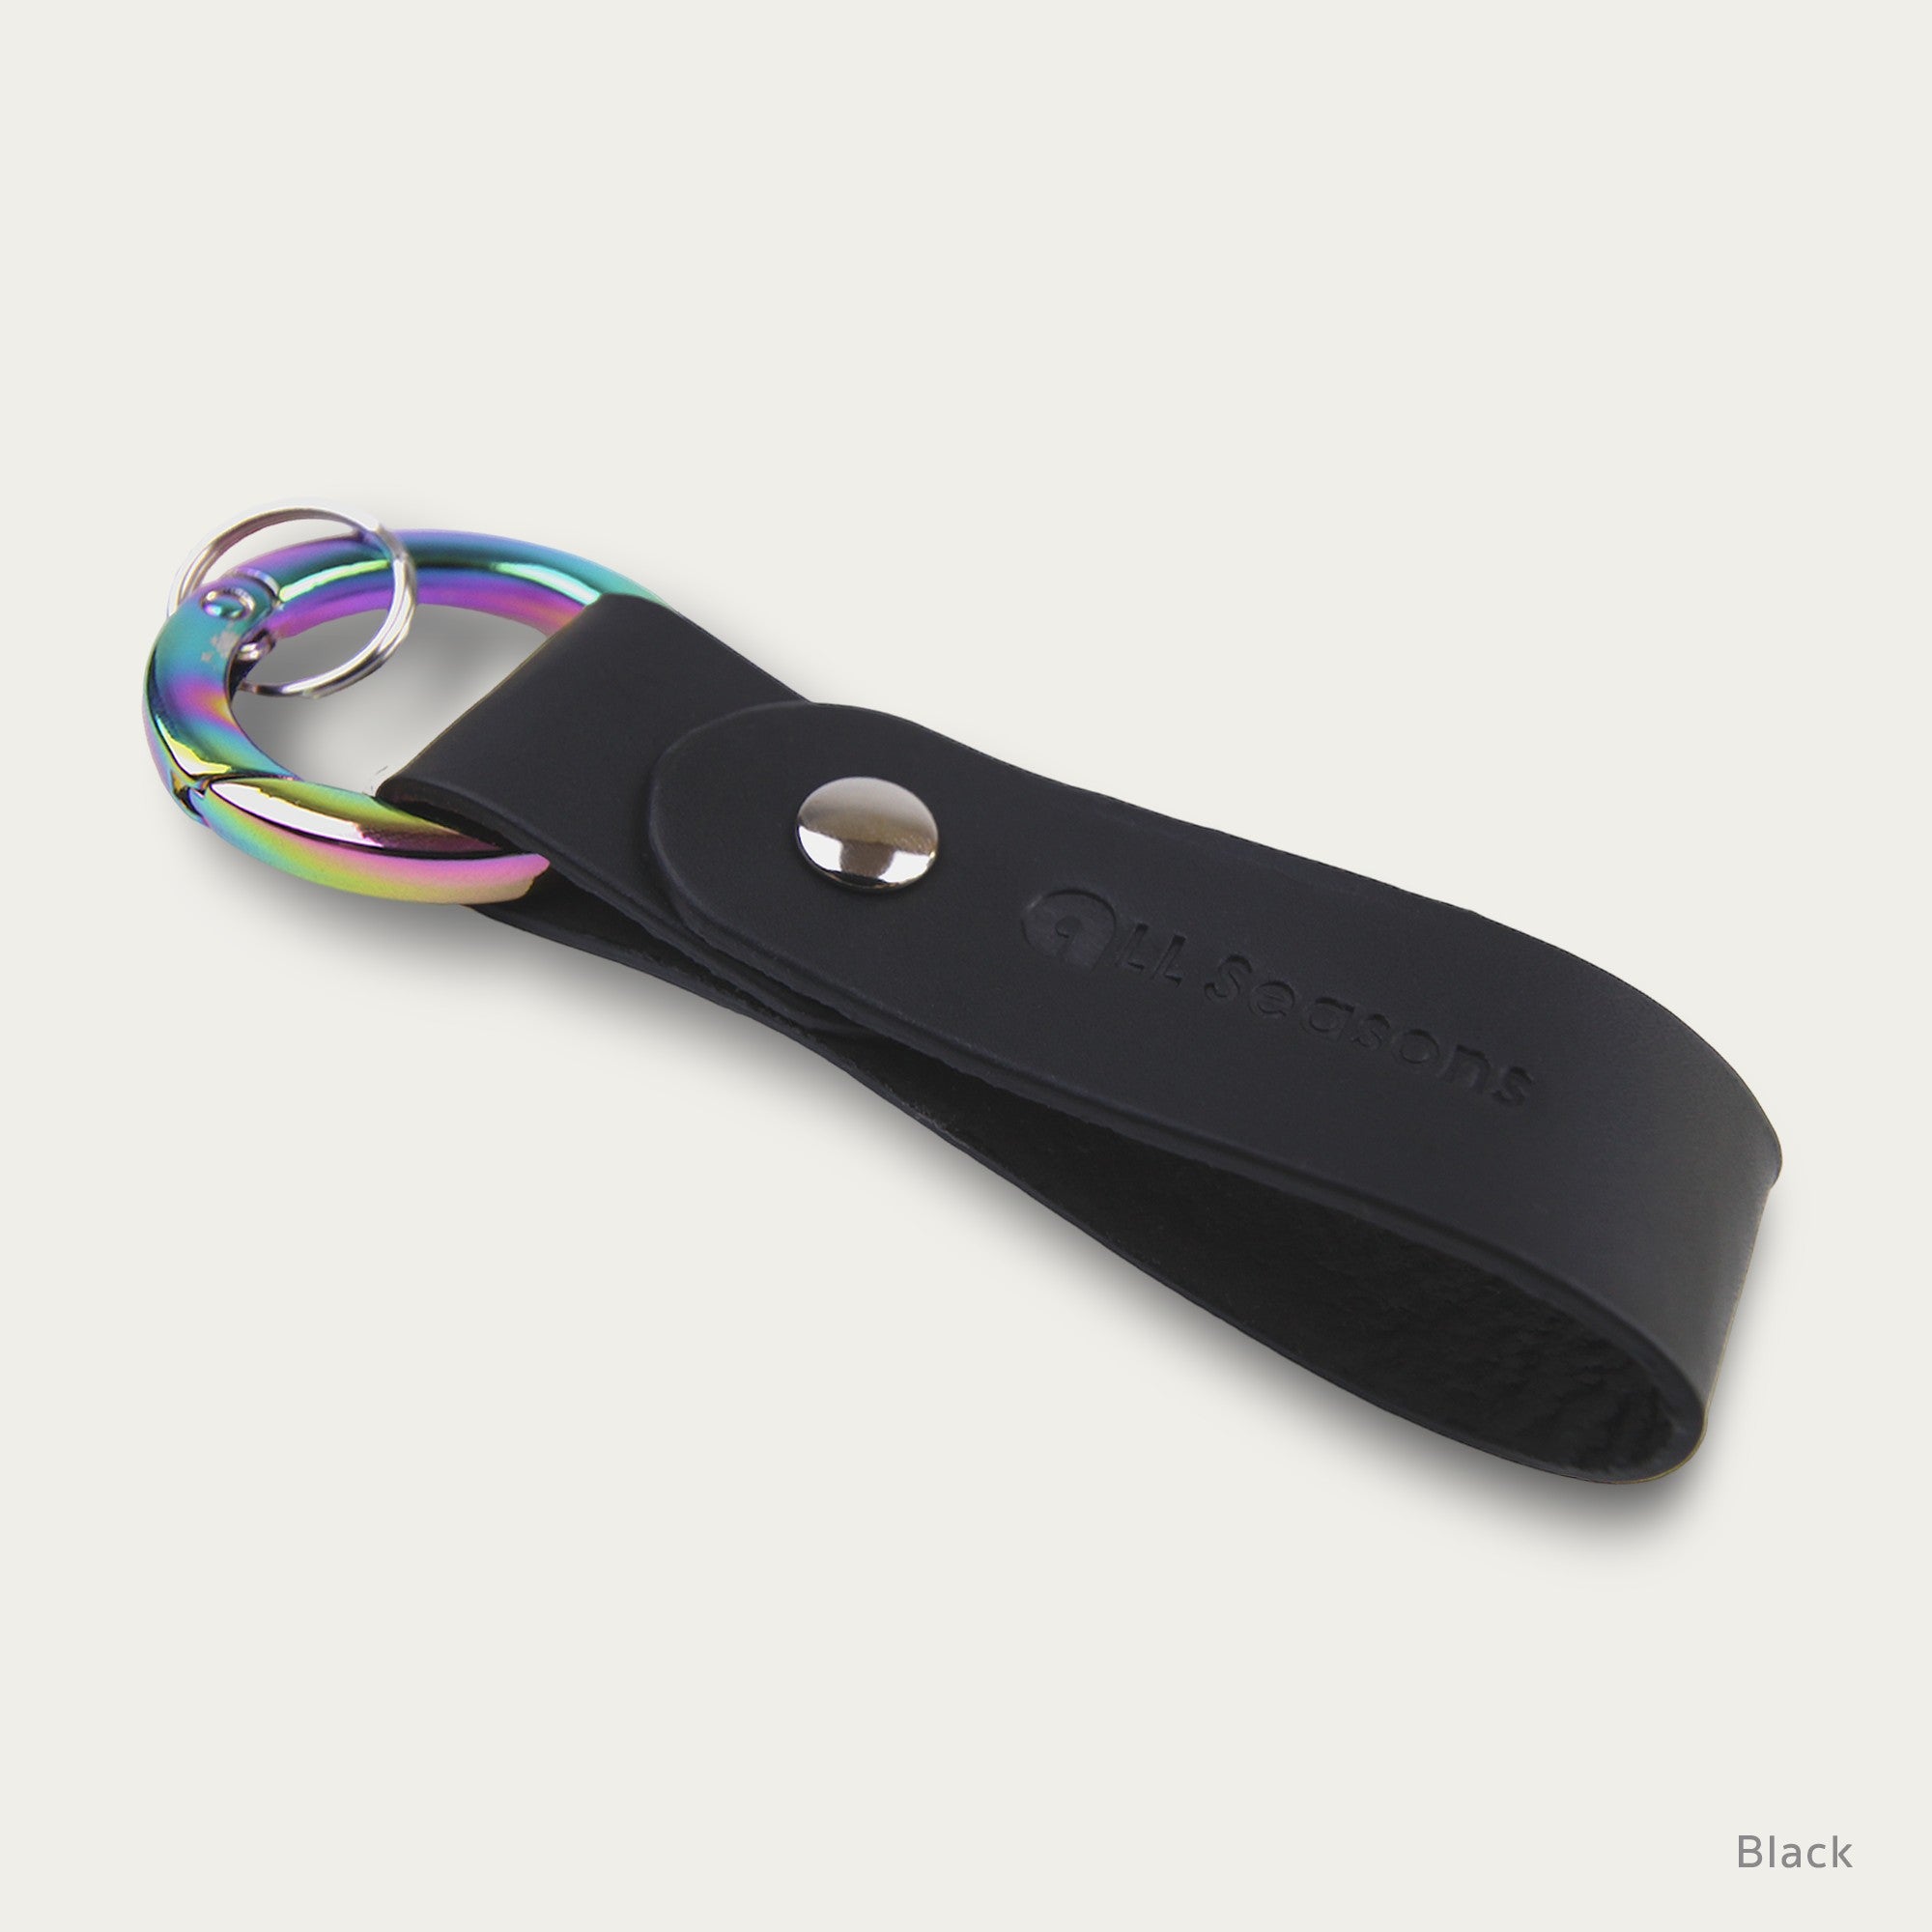 A Rainbow Circular Keychain [Smooth Leather] V.3